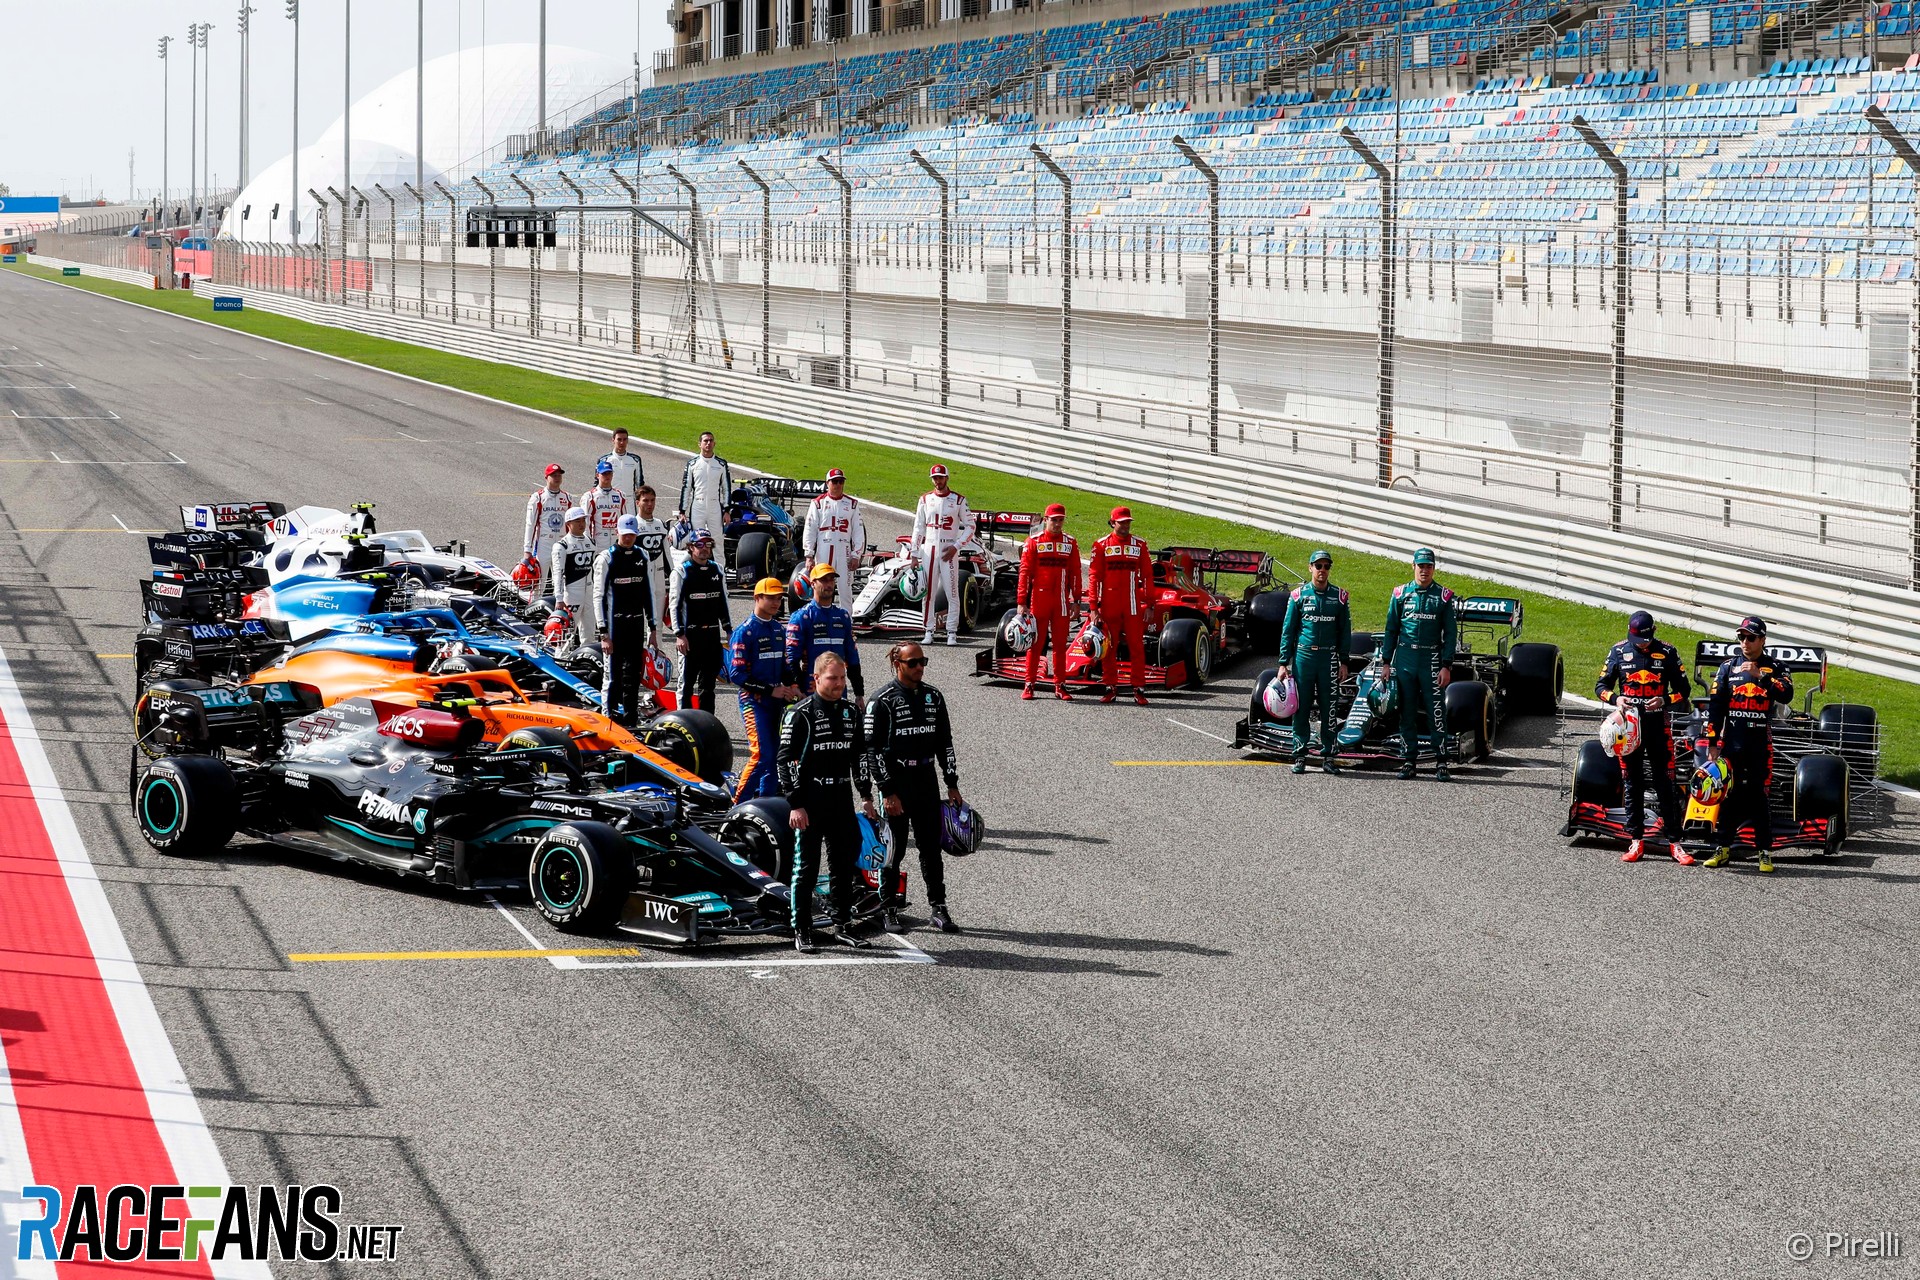 F1 drivers and cars, Bahrain International Circuit, 2021